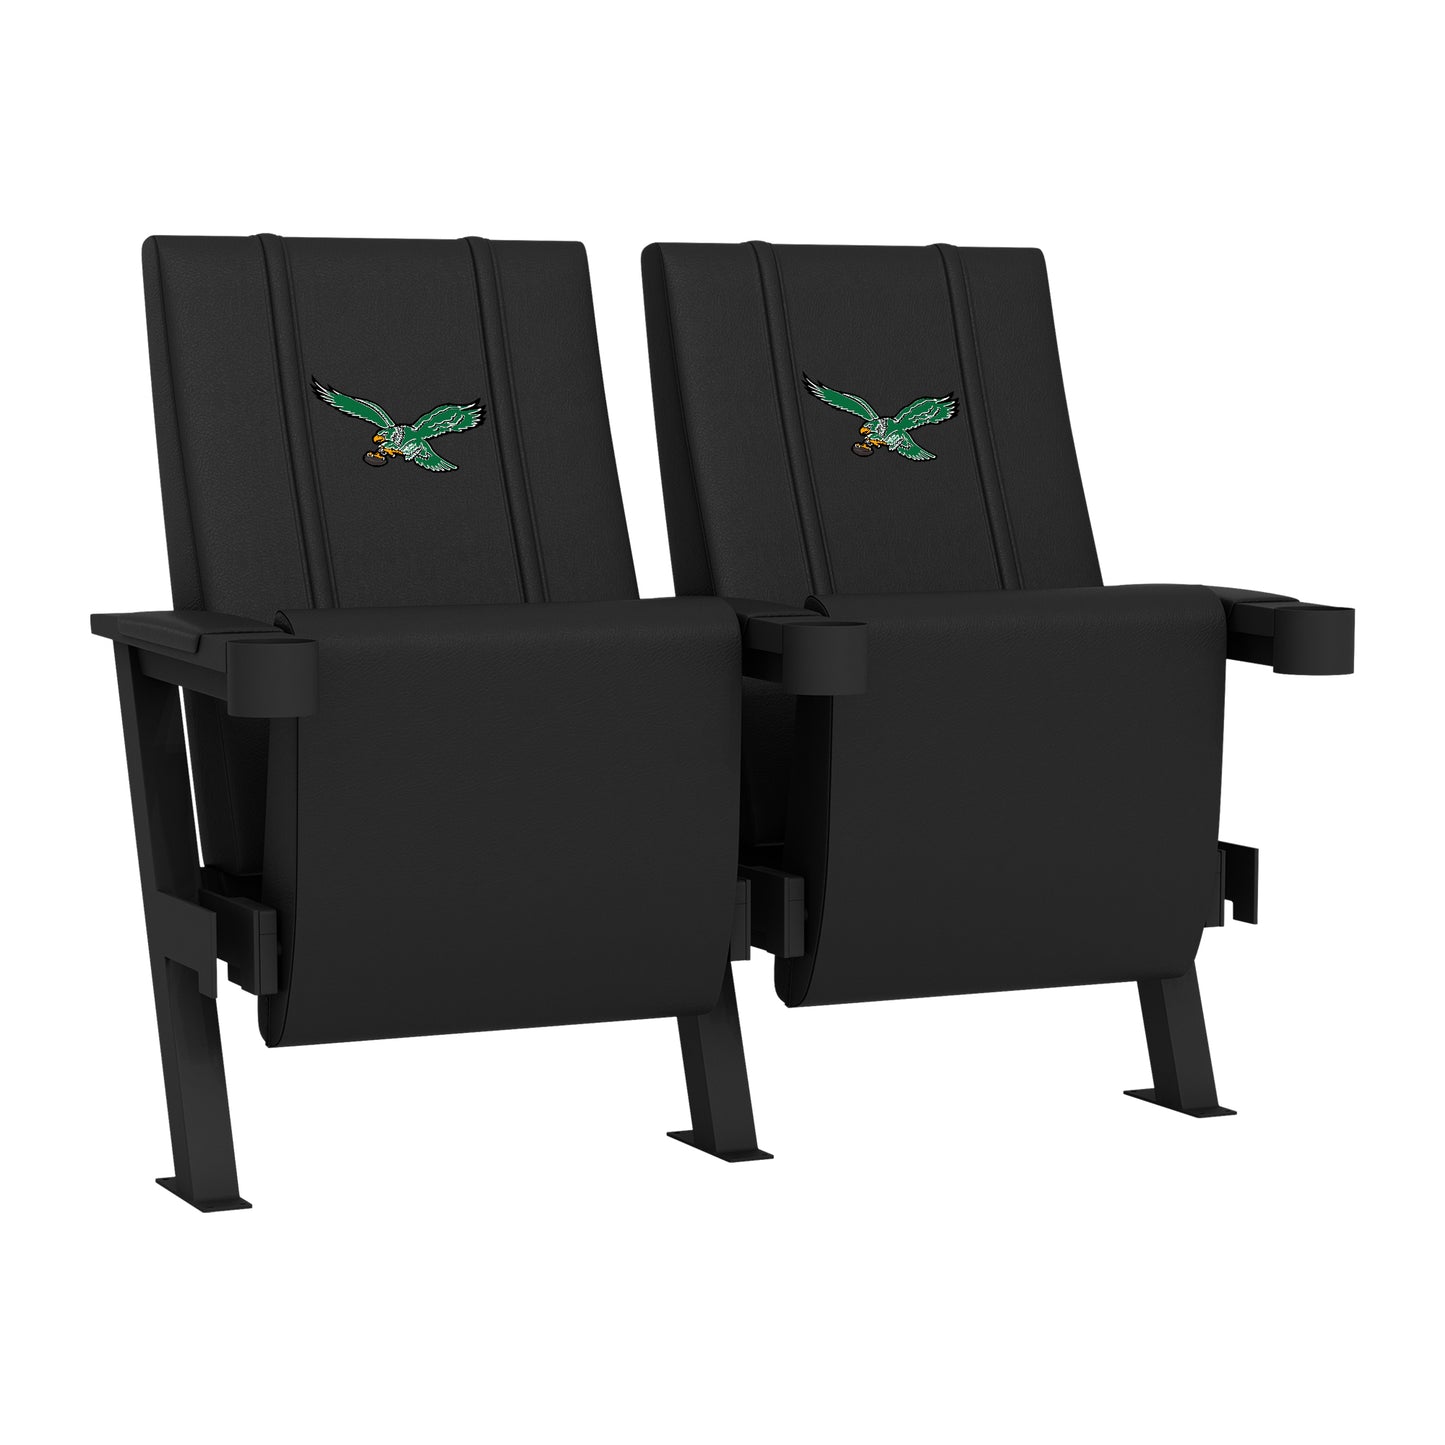 SuiteMax 3.5 VIP Seats with Philadelphia Eagles Classic Logo